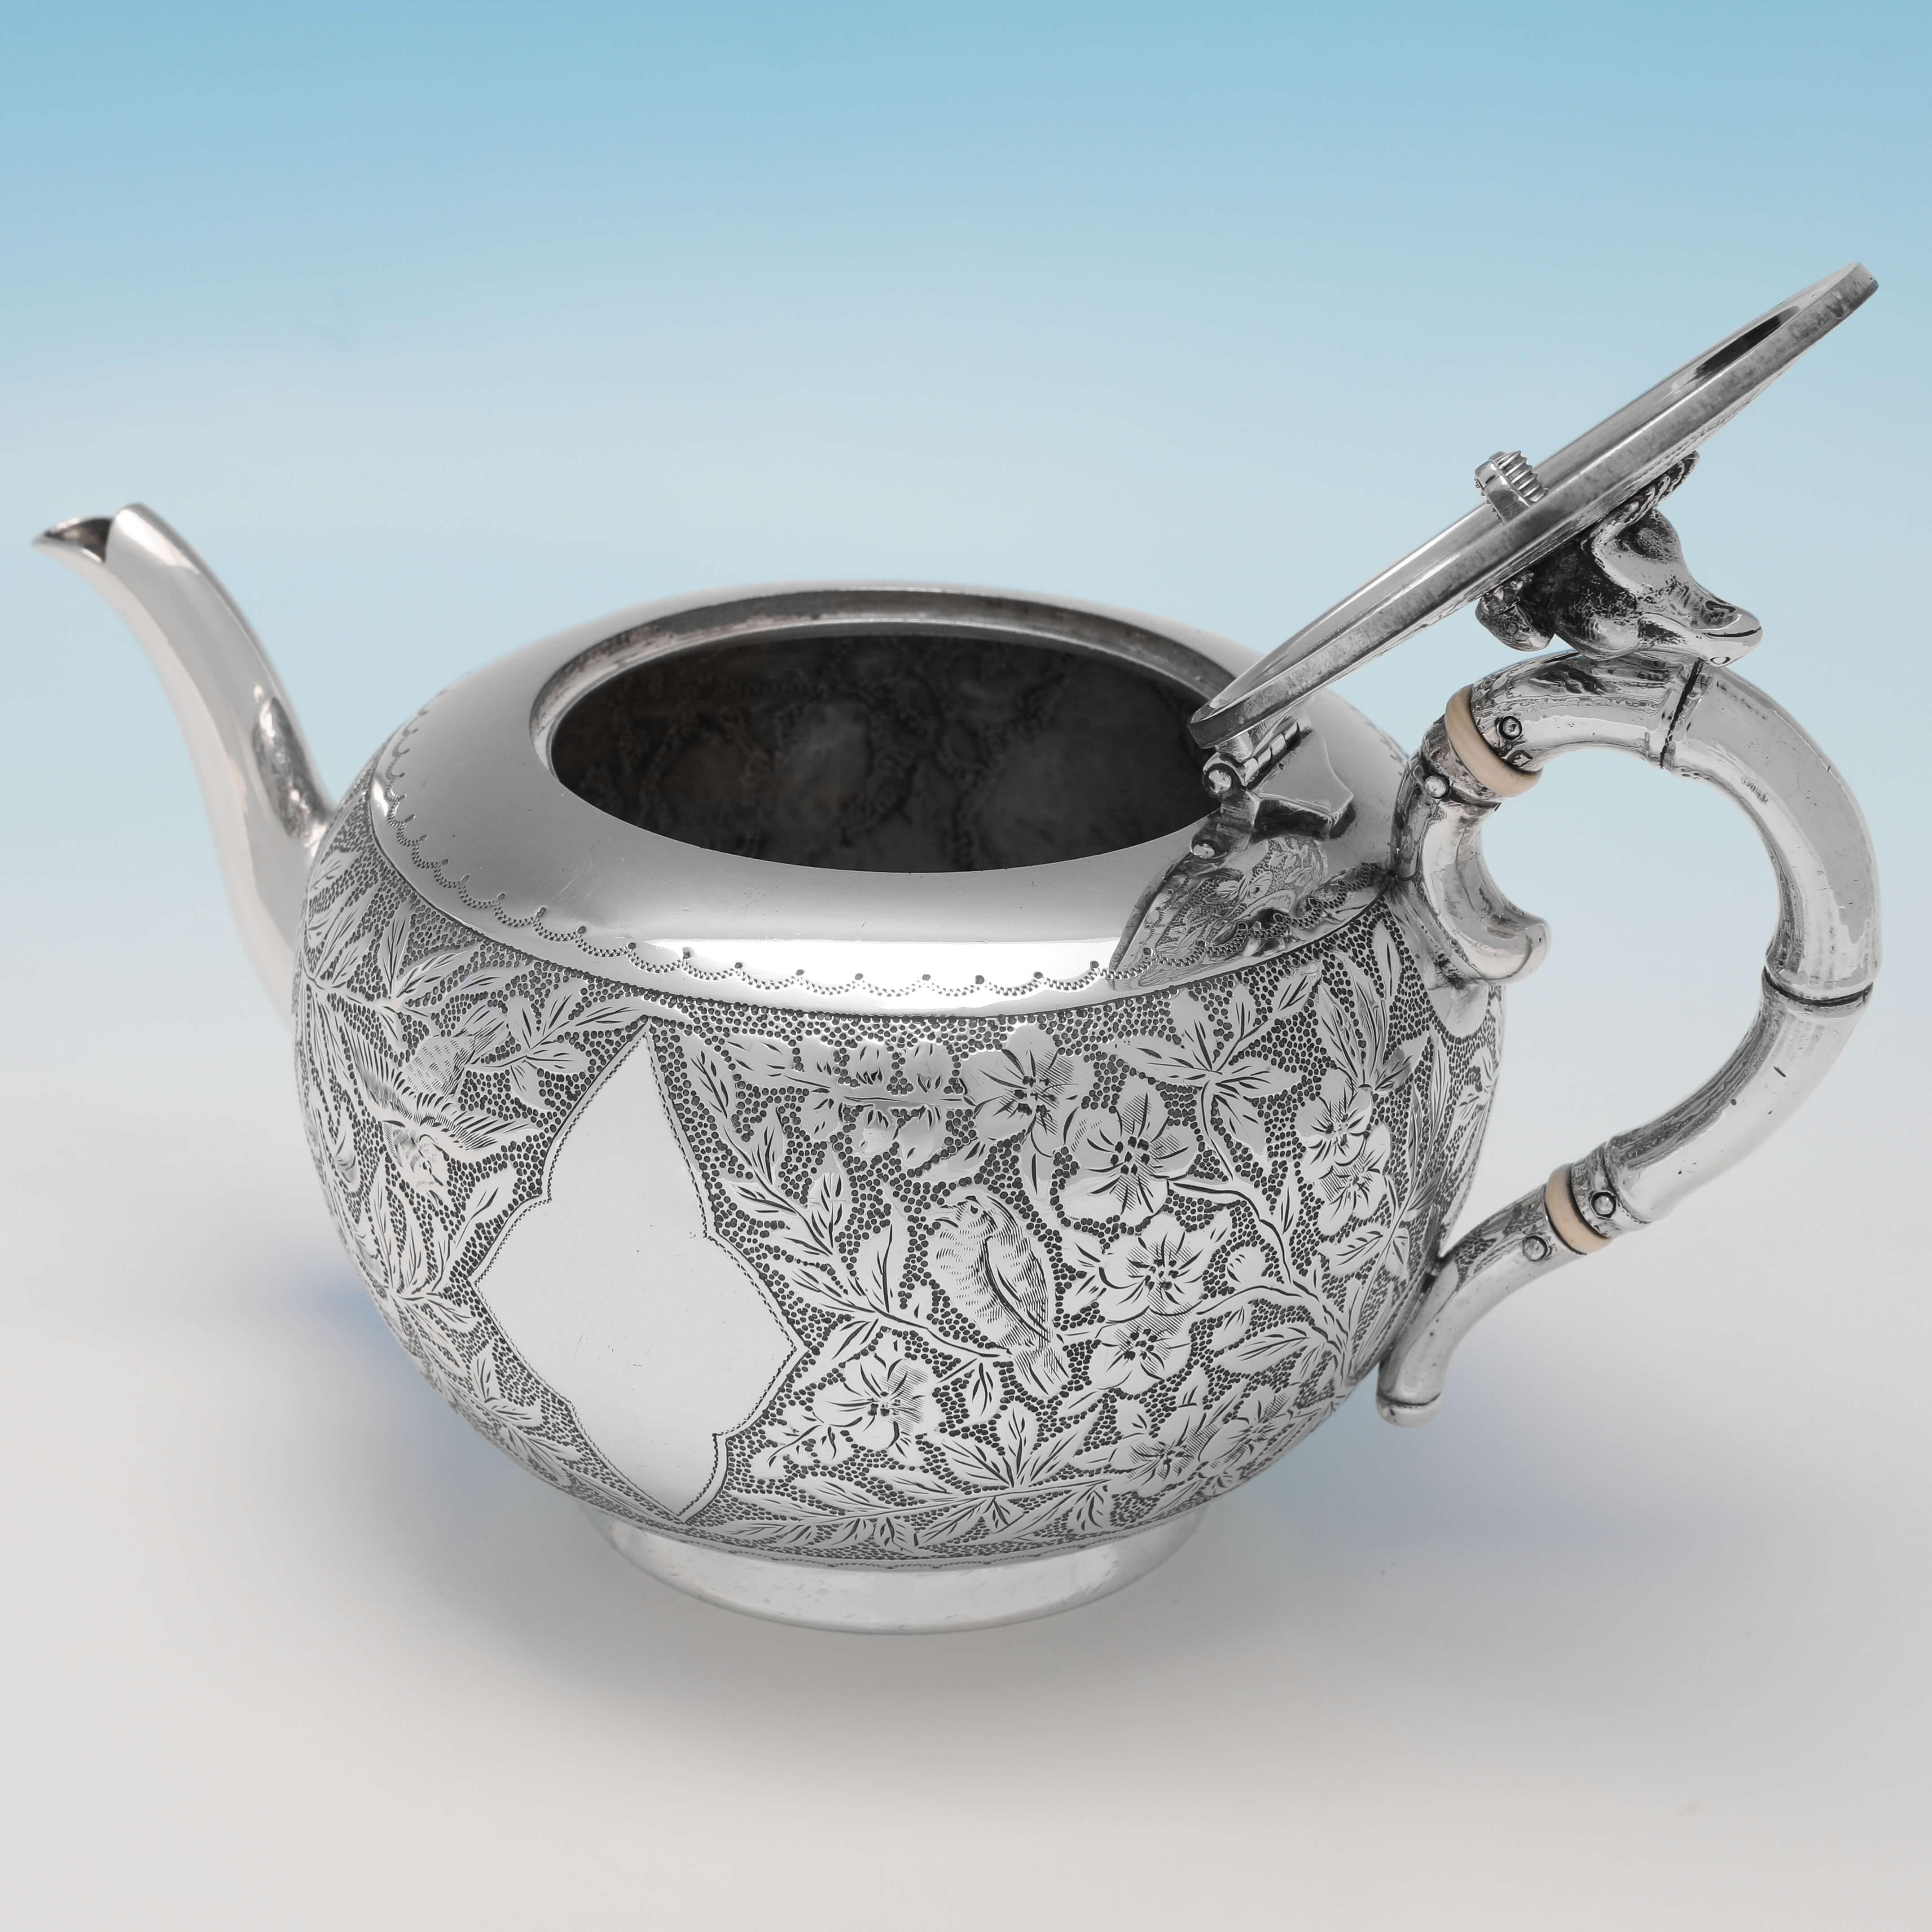 Aesthetic Movement Aesthetic Design Antique English Silver Teapot, Hallmarked London, 1890